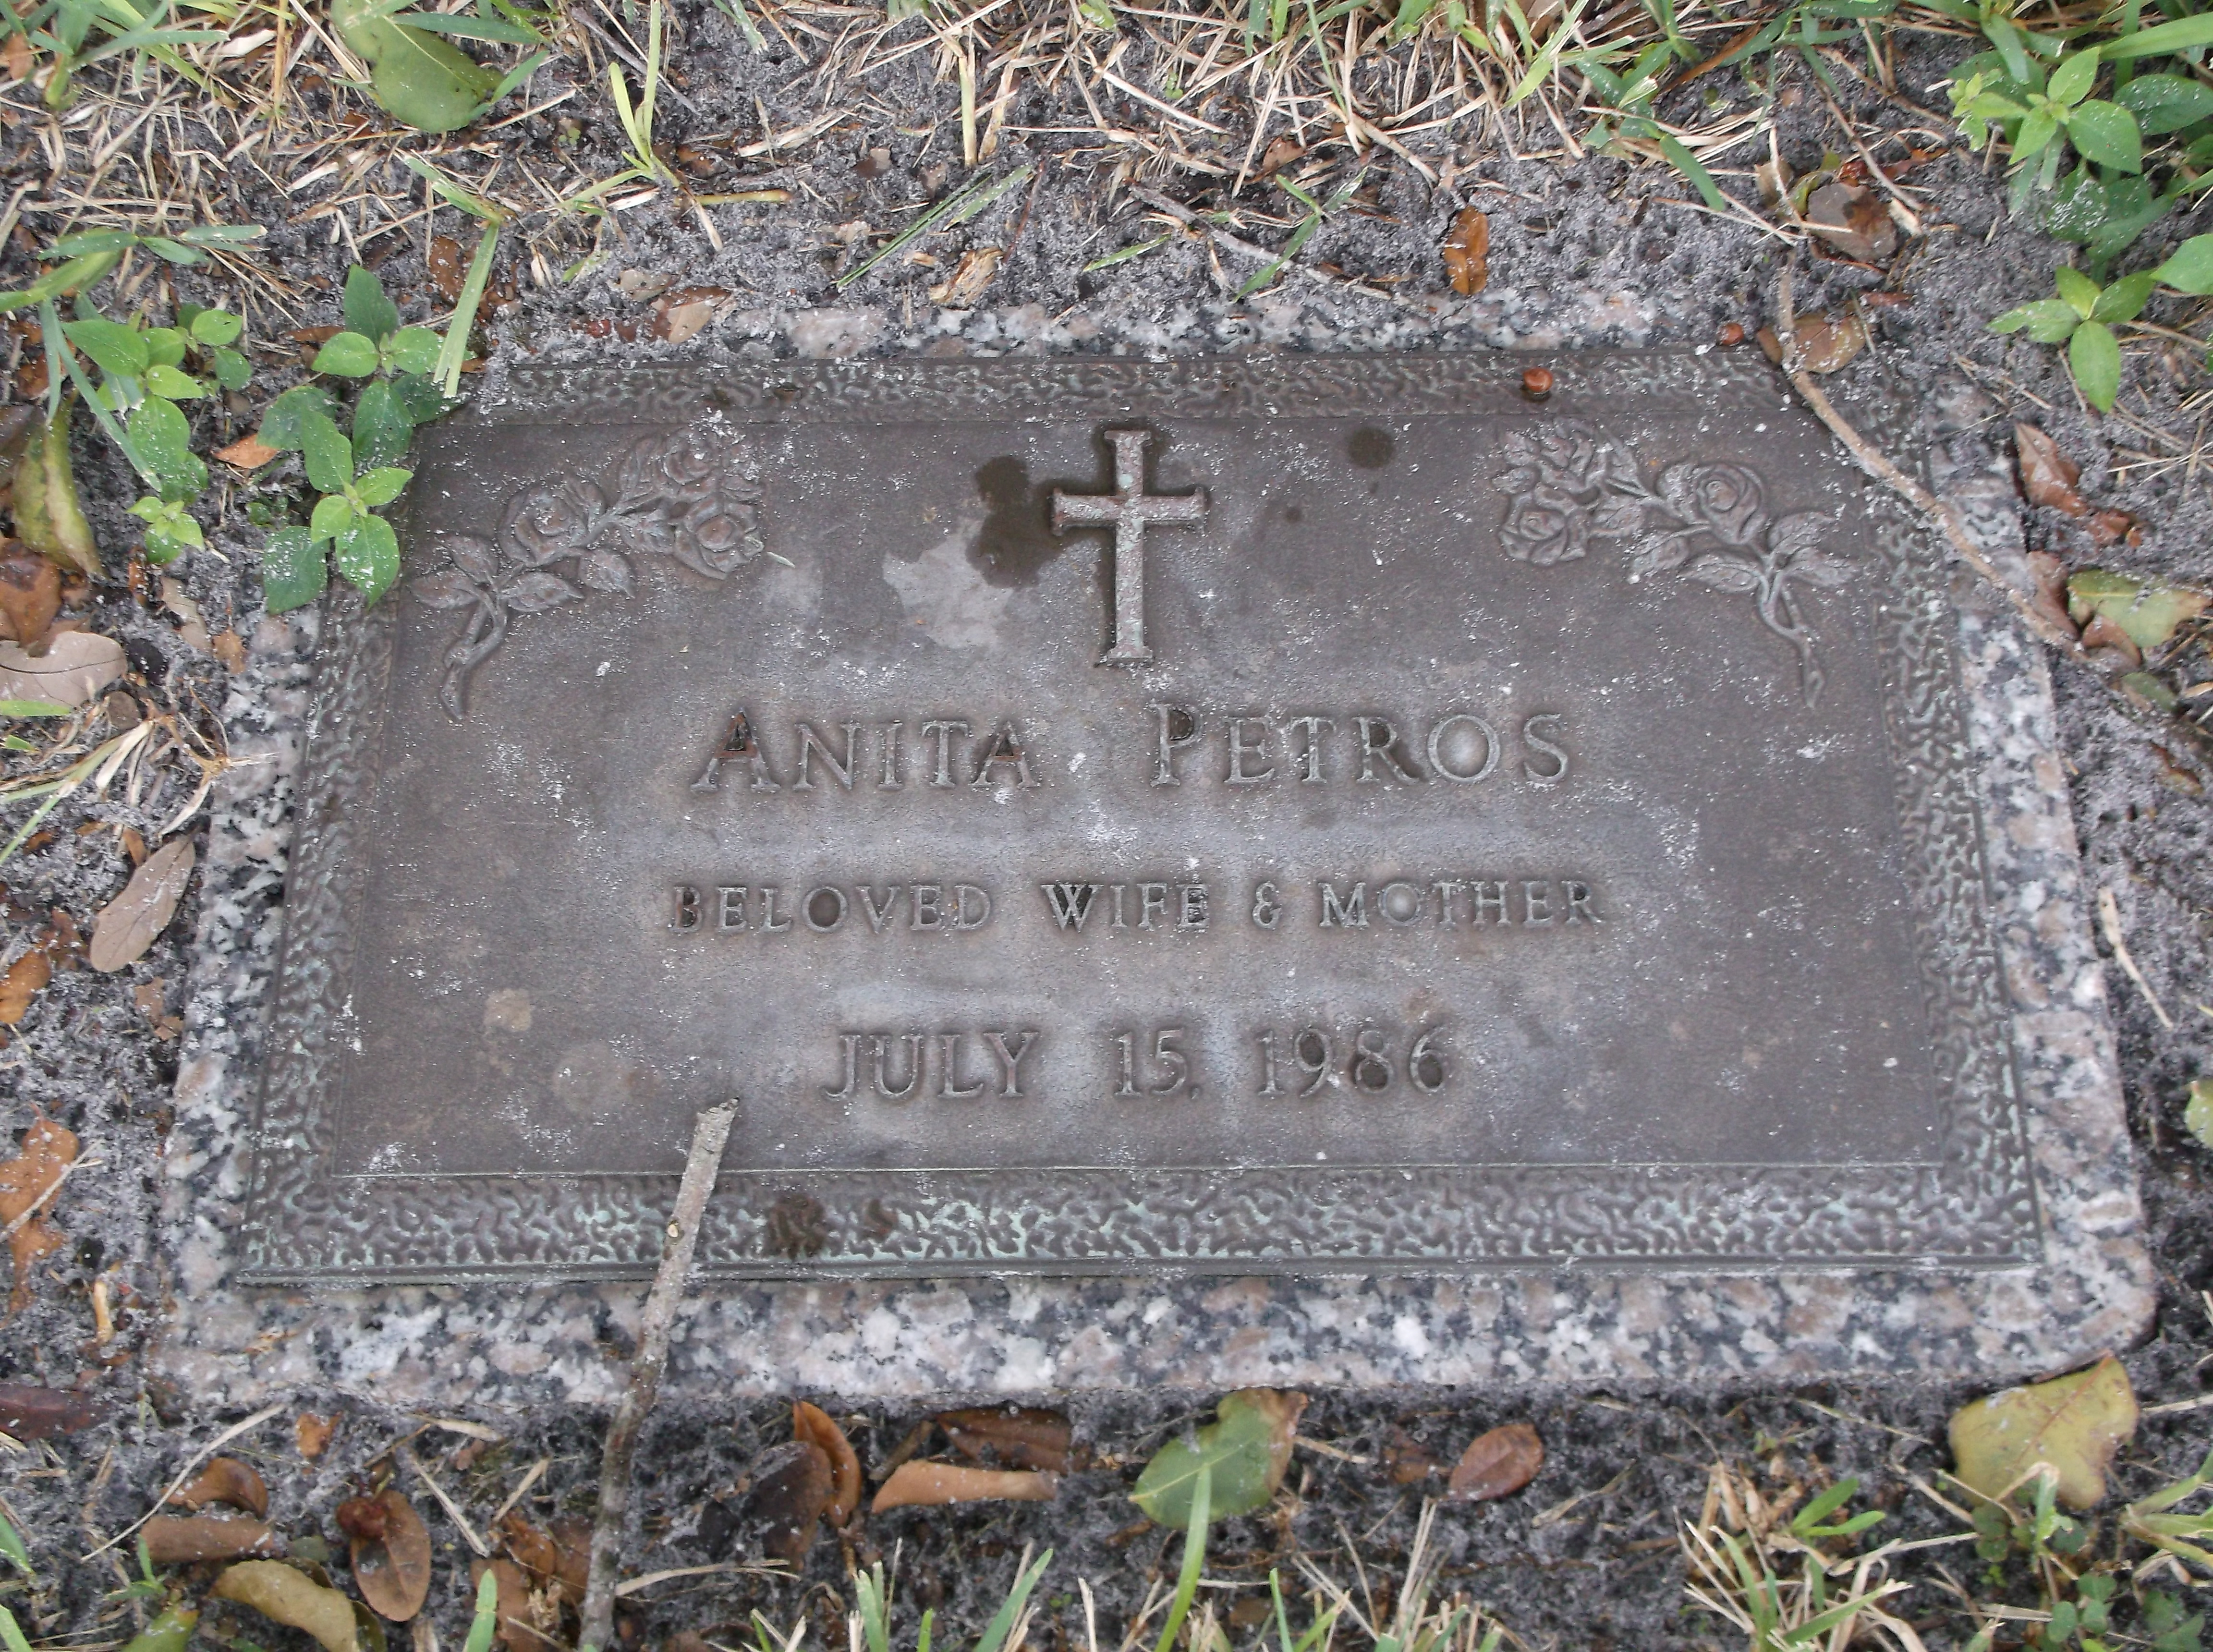 Anita Petros